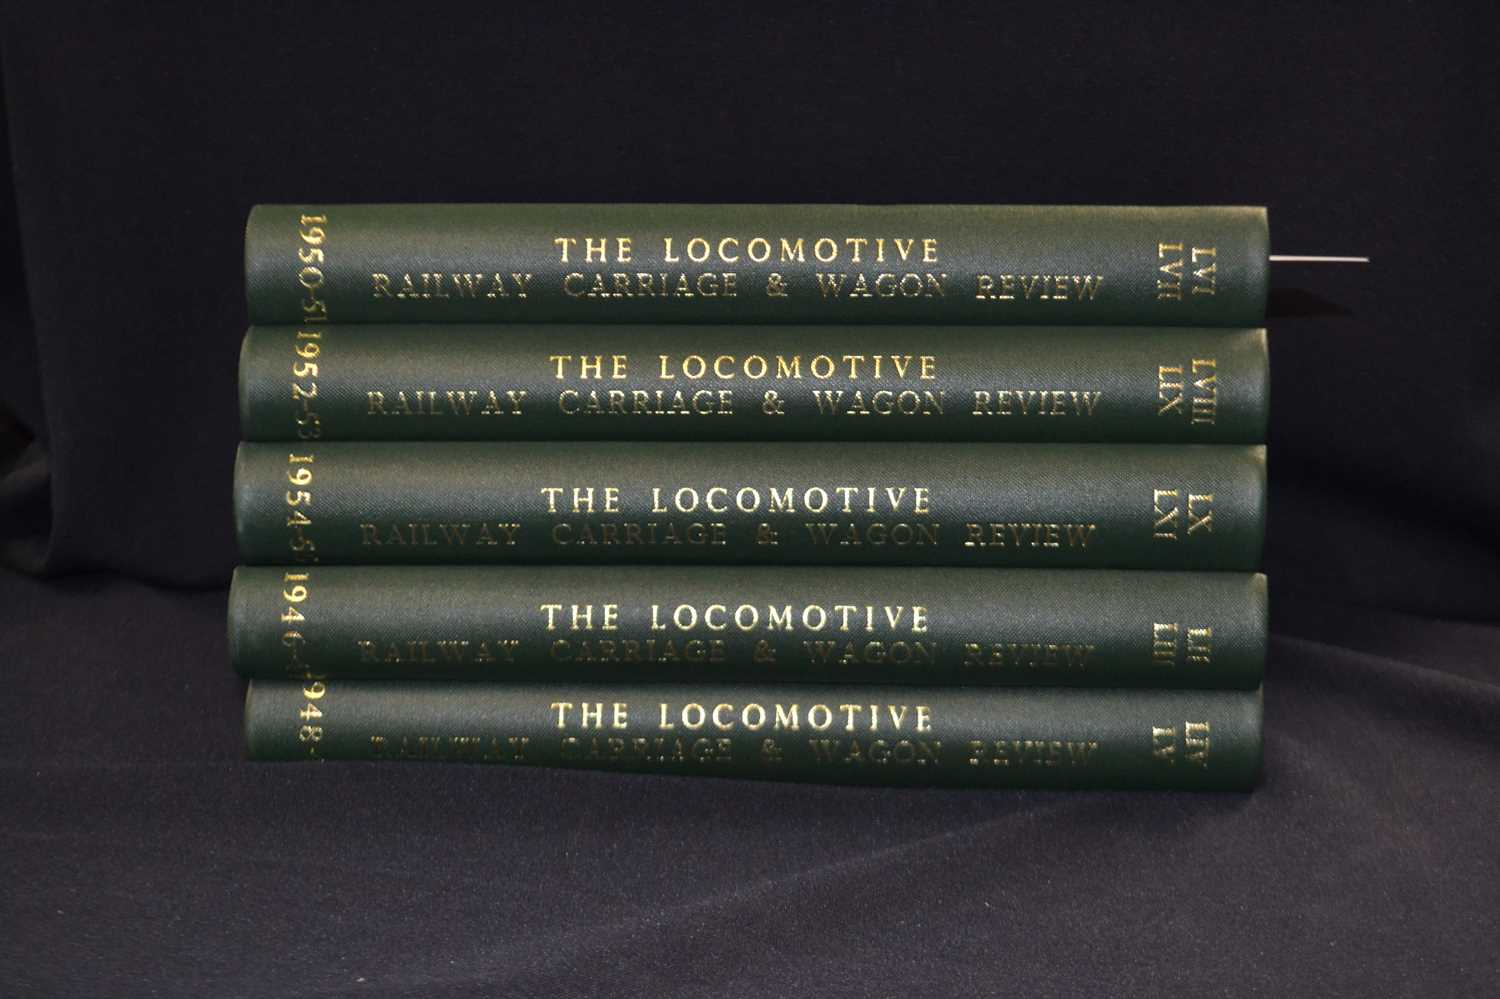 RAILWAY: THE LOCOMOTIVE RAILWAY CARRIAGE AND WAGON REVIEW. 5 volumes: LII / LIII, 1946-47; LLIV/